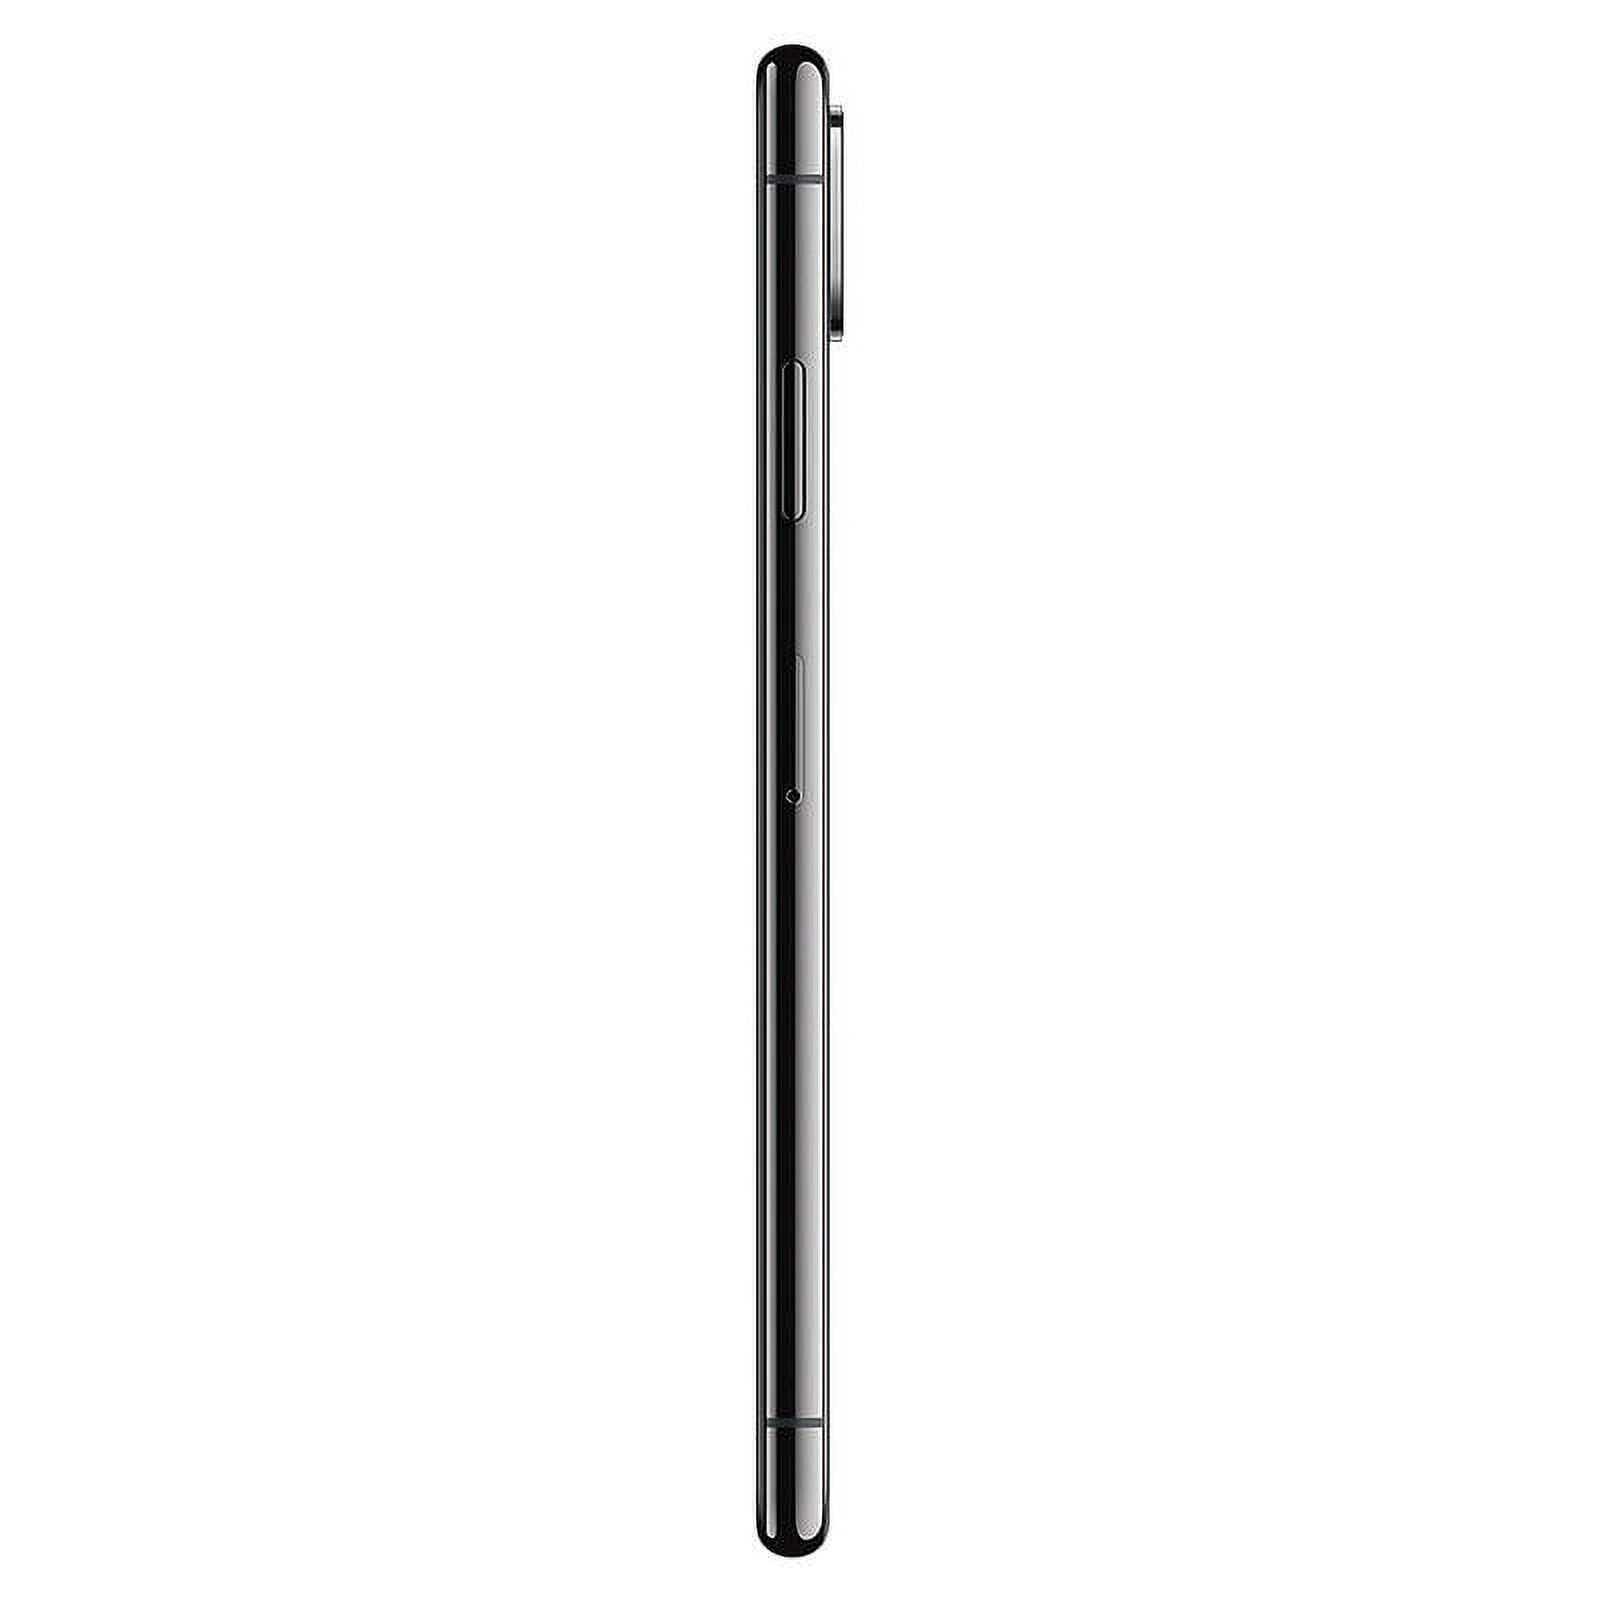 Restored iPhone XS Max 512GB Gray (Verizon) (Refurbished) - image 5 of 5